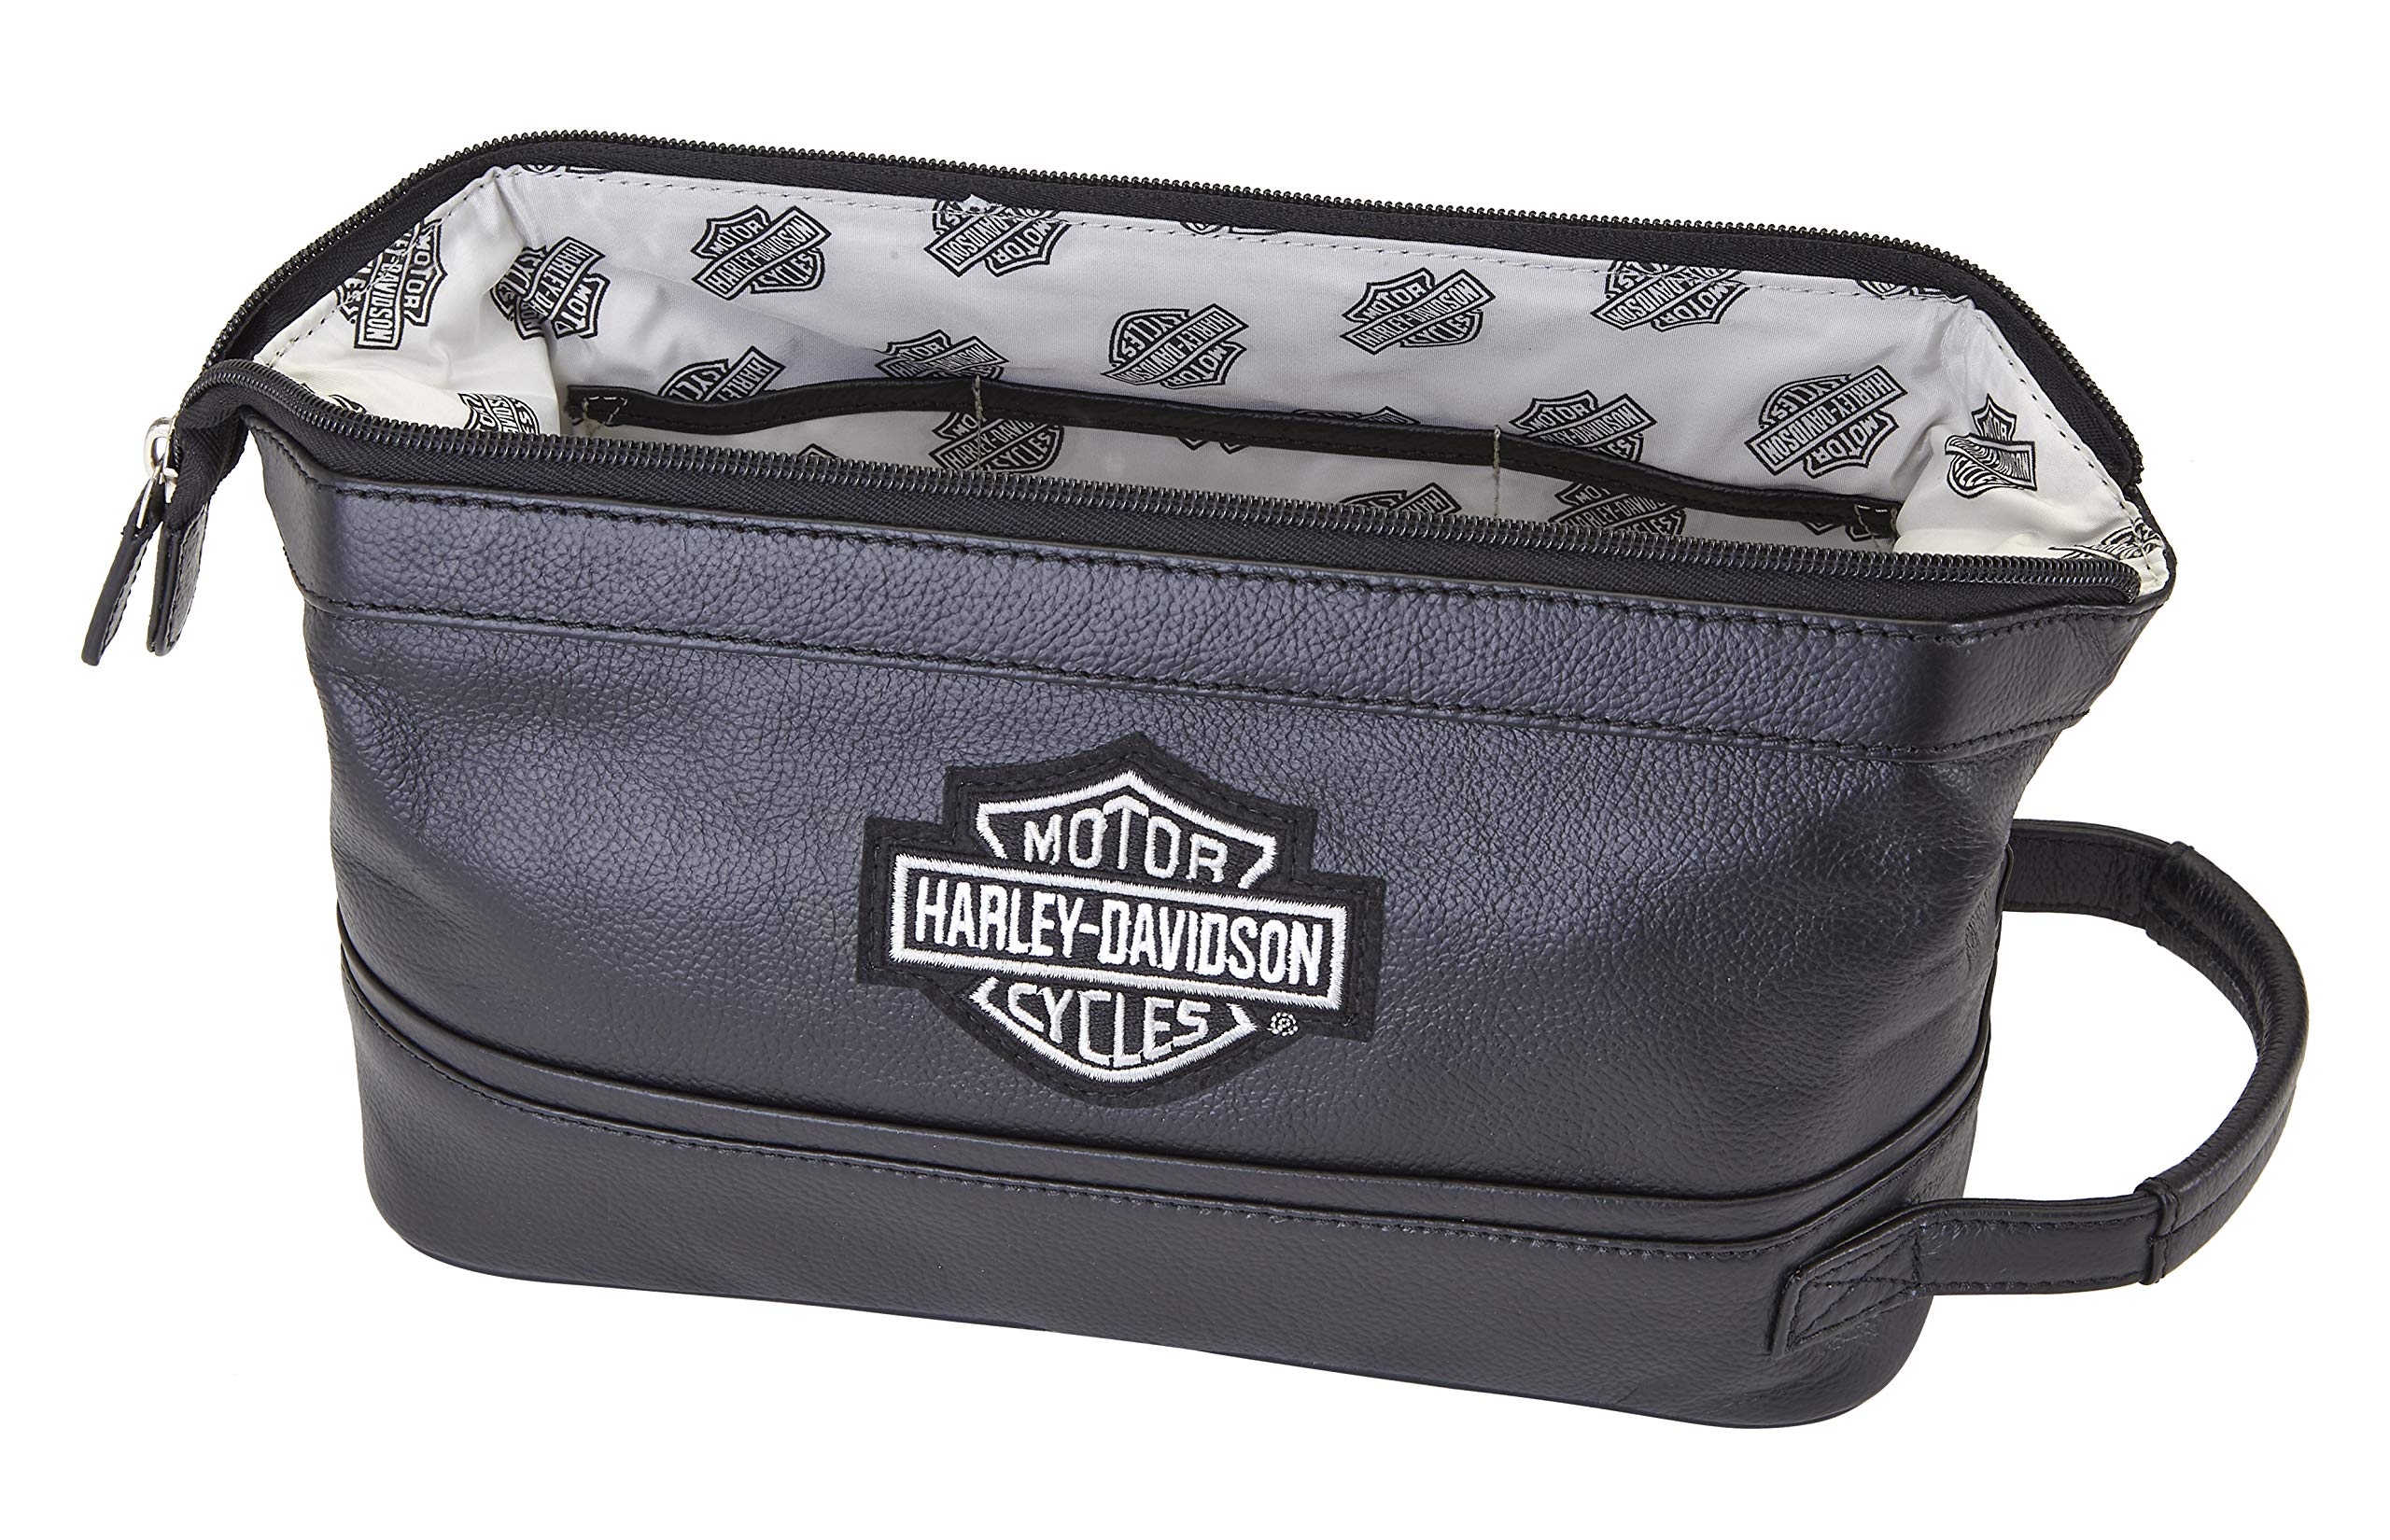 Harley Davidson Leather Toiletry Kit, Black, One Size